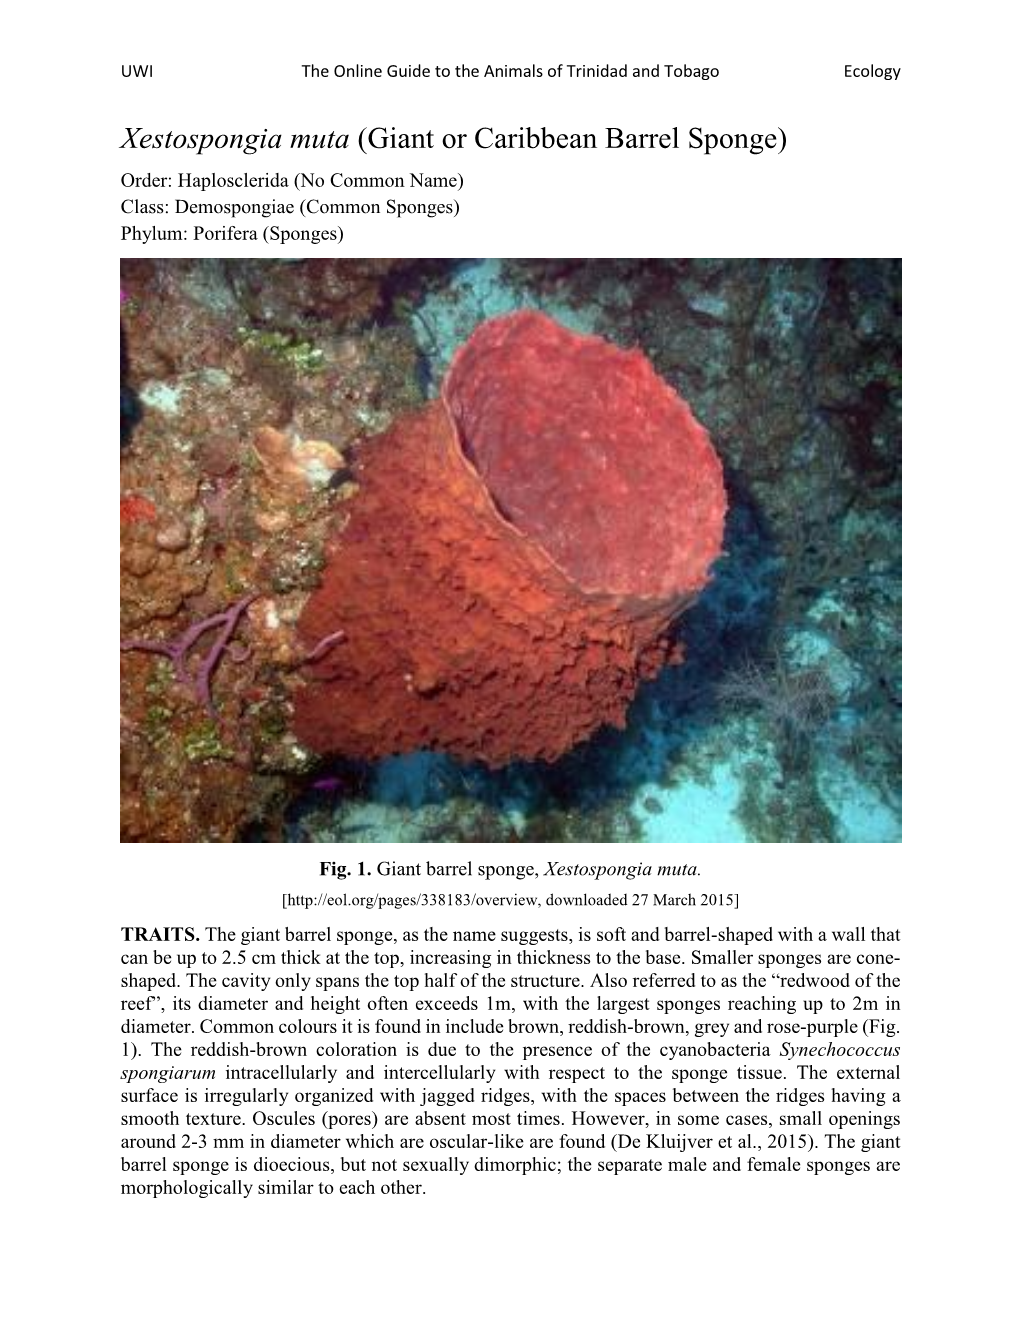 Xestospongia Muta (Giant Or Caribbean Barrel Sponge) Order: Haplosclerida (No Common Name) Class: Demospongiae (Common Sponges) Phylum: Porifera (Sponges)